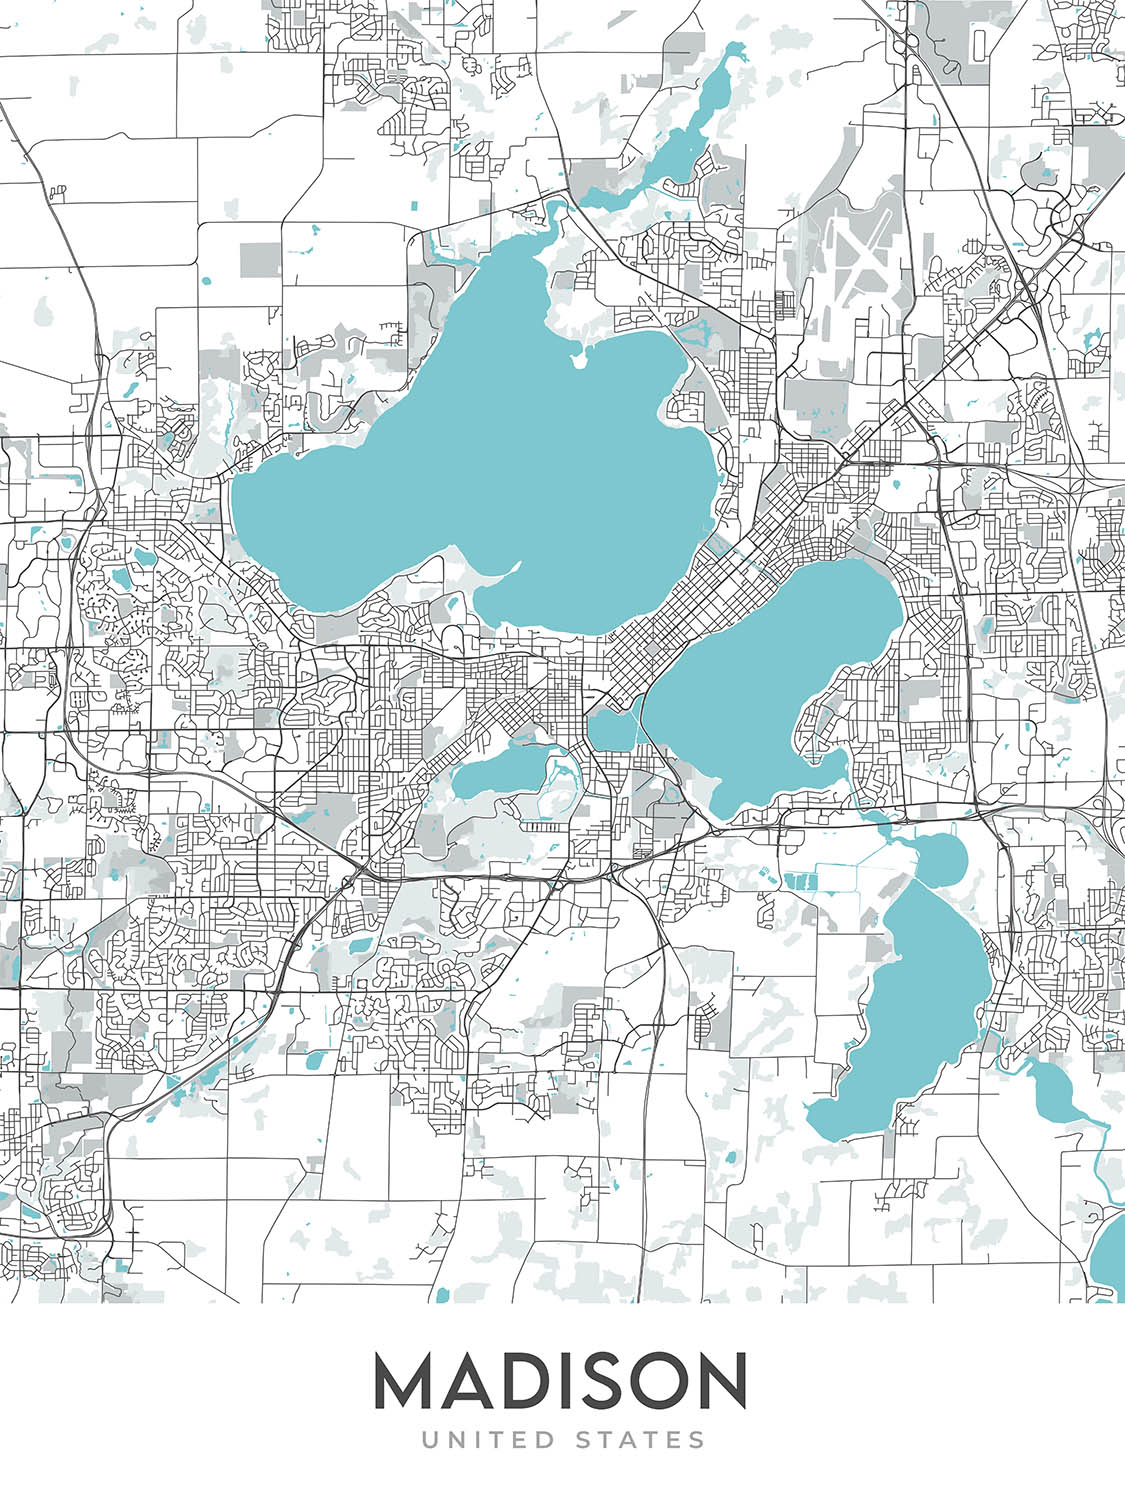 Modern City Map of Madison, WI: UW-Madison, Capitol, State St, Olbrich Park, Henry Vilas Zoo